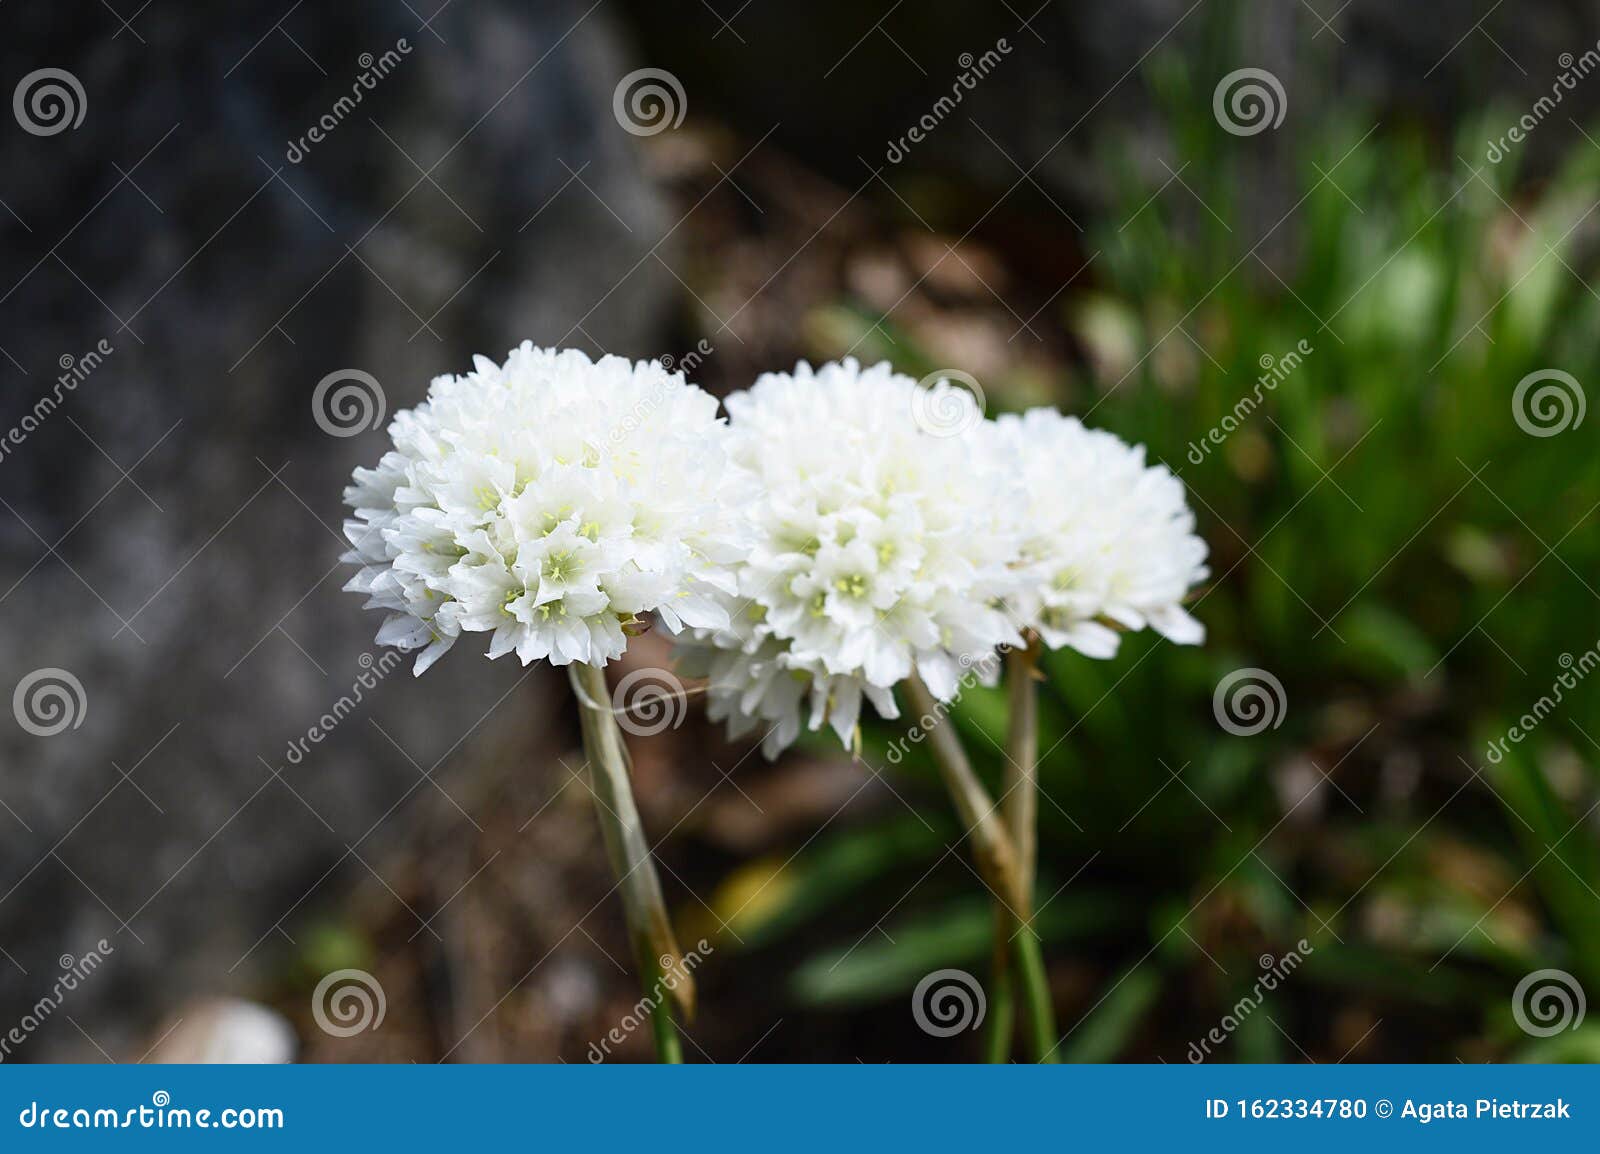 armeria pseudarmeria with ball-d white flowers